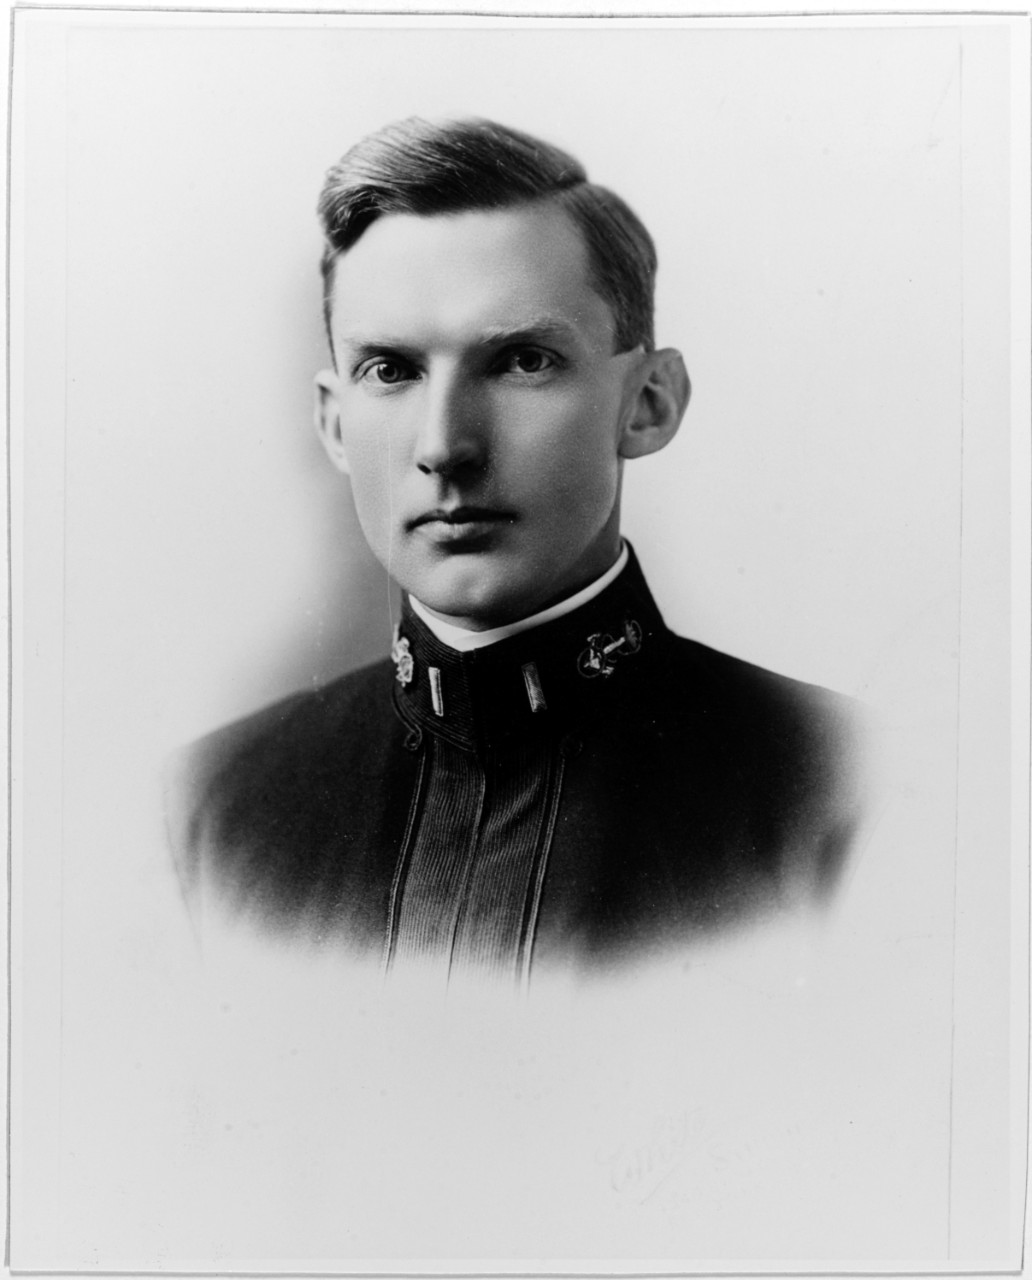 Lieutenant Commander Donald B. Beary, USN